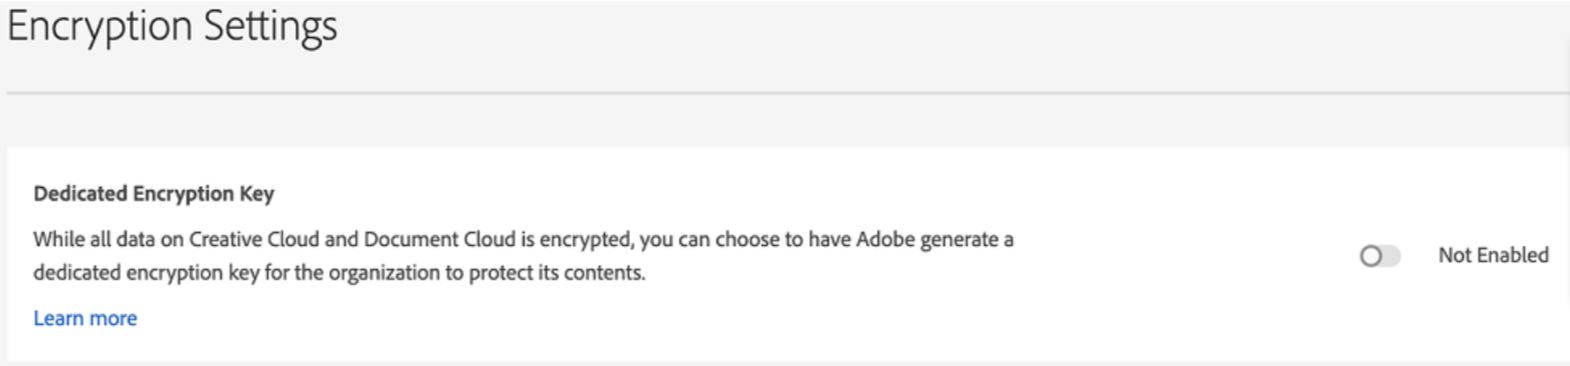 Adobe Directory Settings